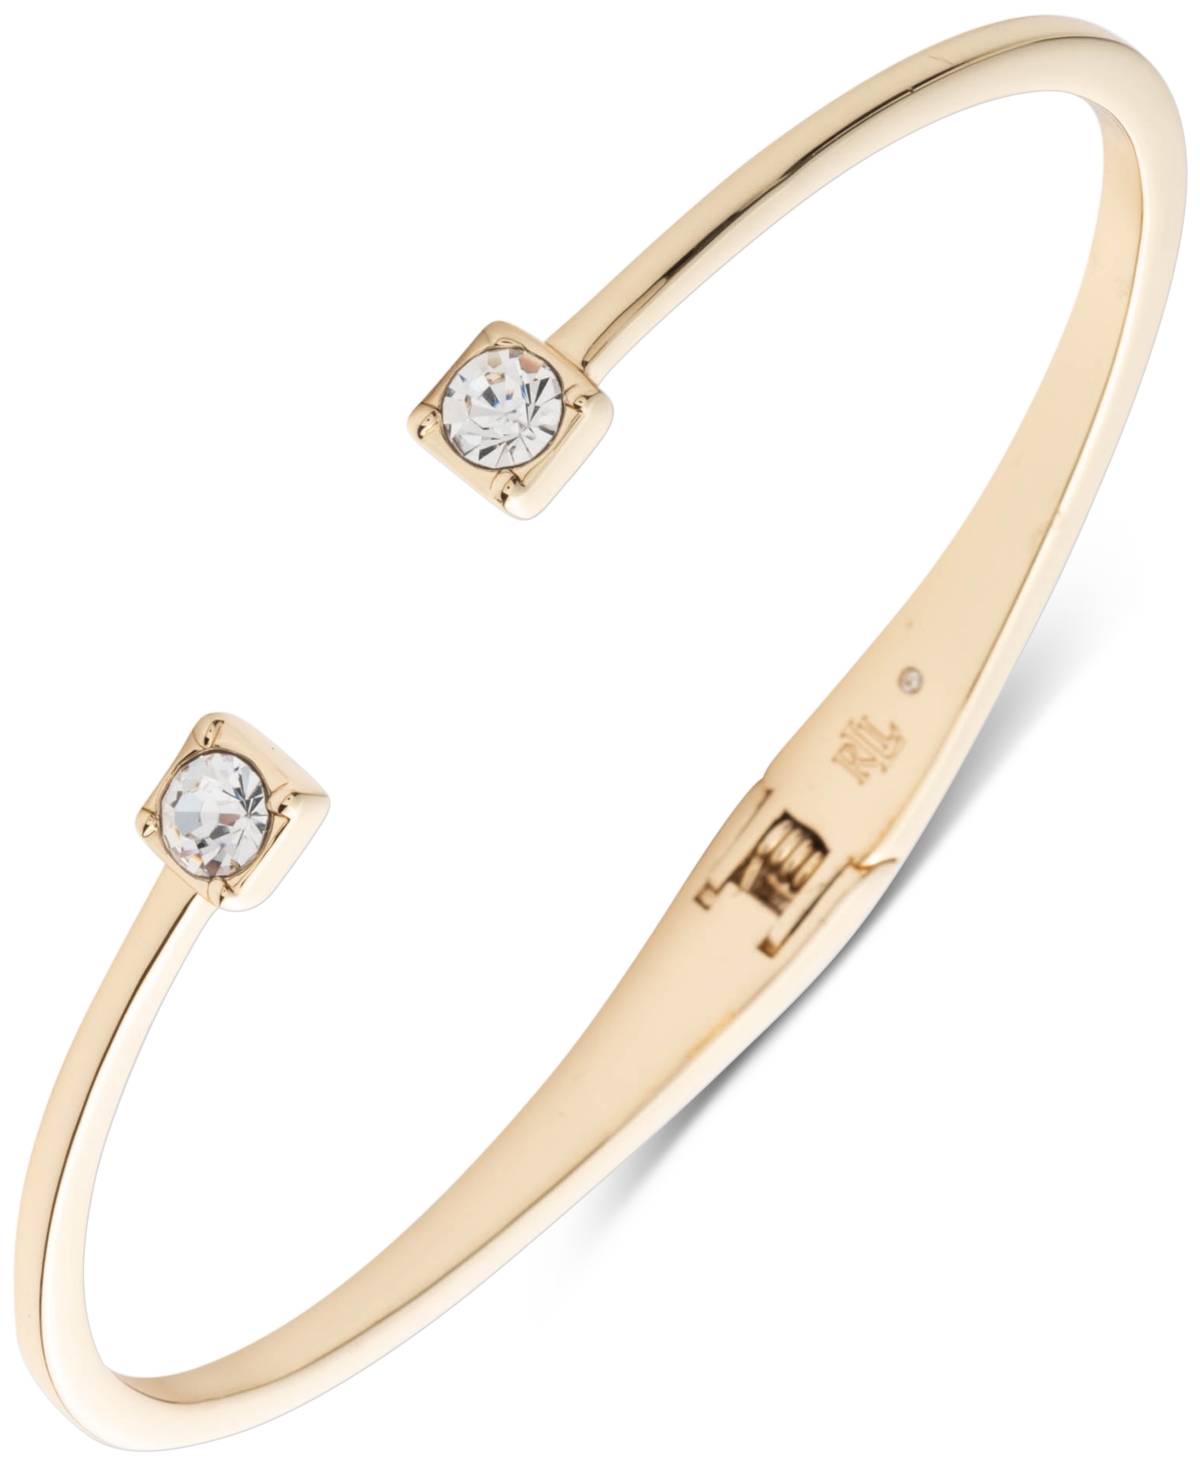 Gold-Tone Crystal Cuff Bracelet - Crystal Wh